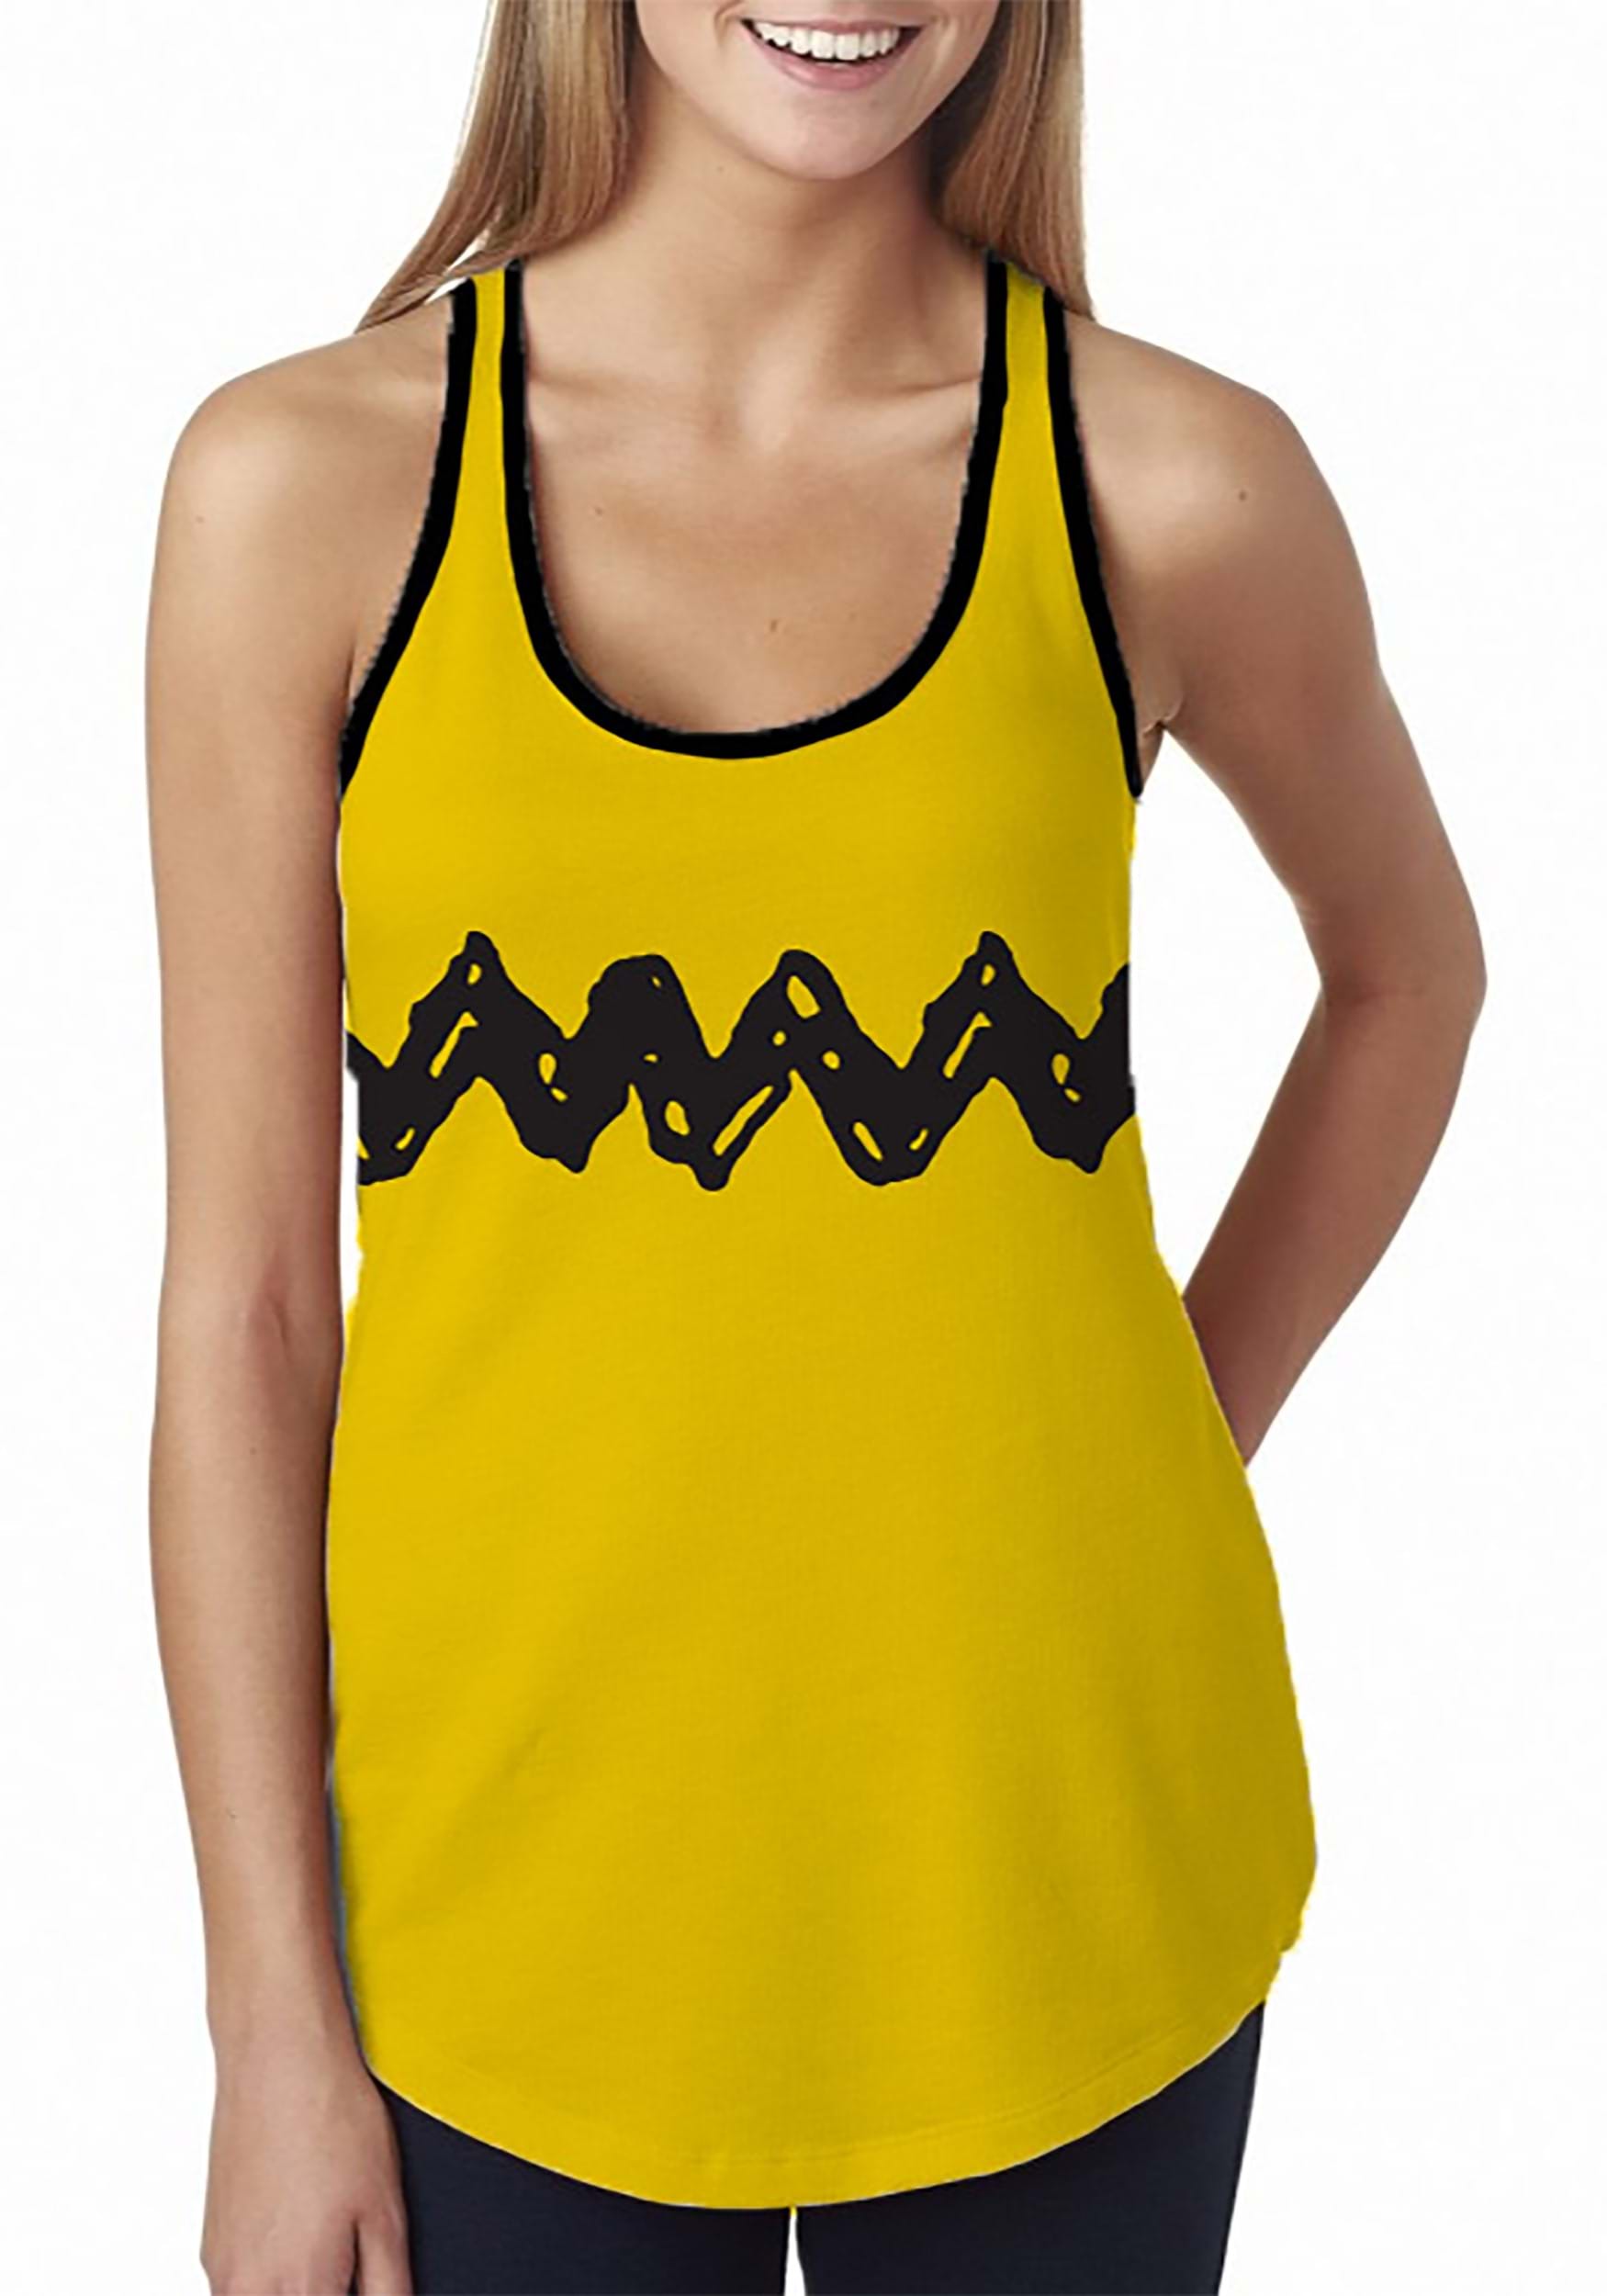 Charlie Brown Tank Top For Women , Charlie Brown Fancy Dress Costume Apparel